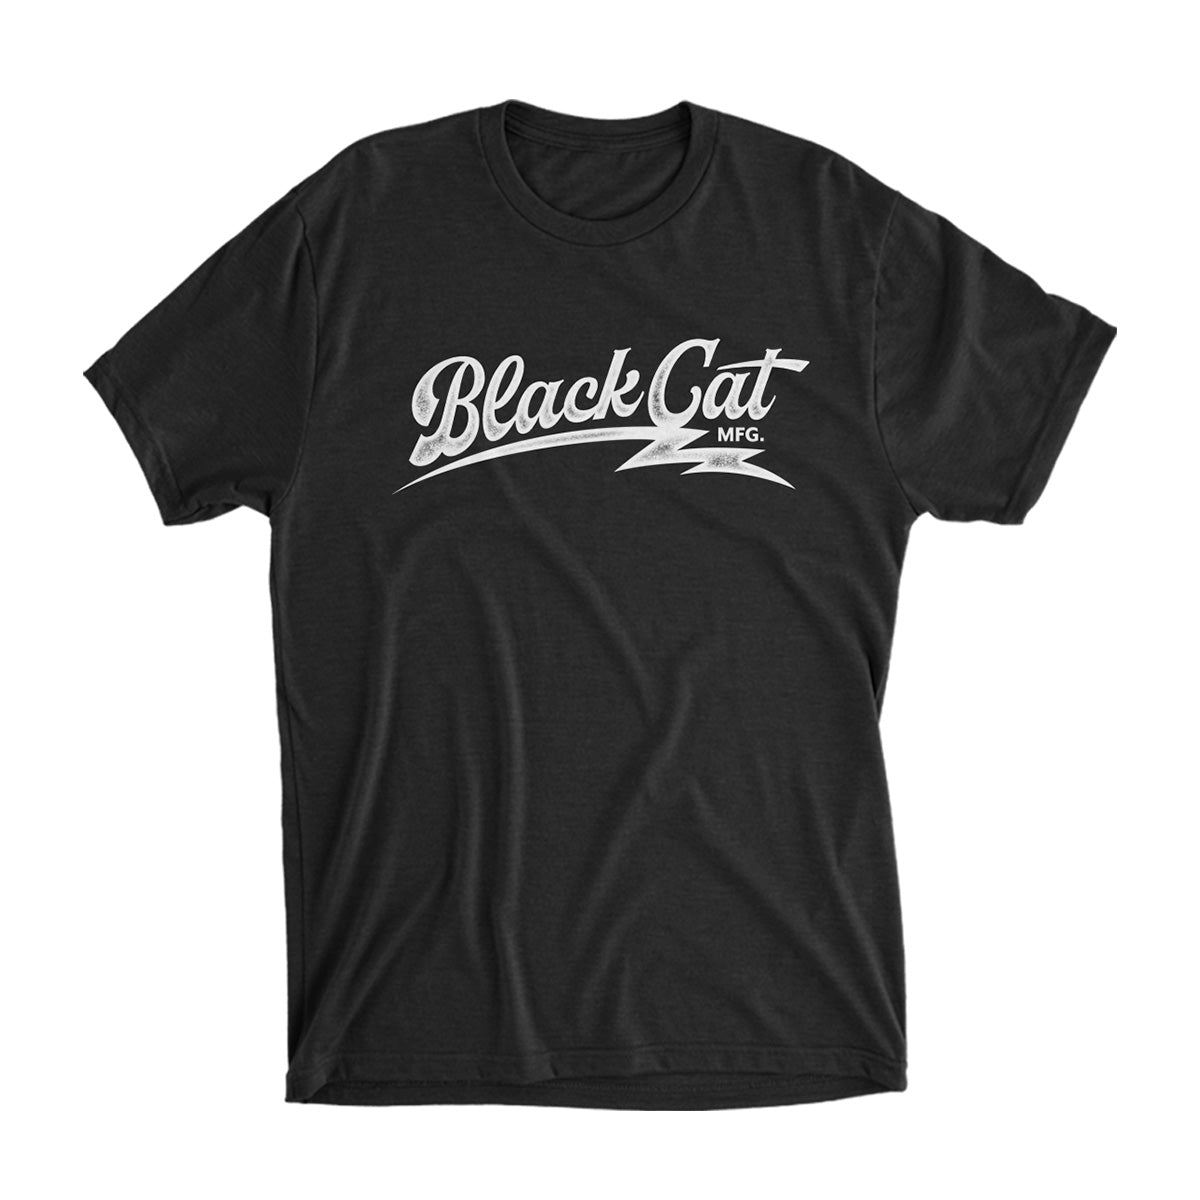 Classic Script T-Shirt - Black Cat MFG - T-Shirt